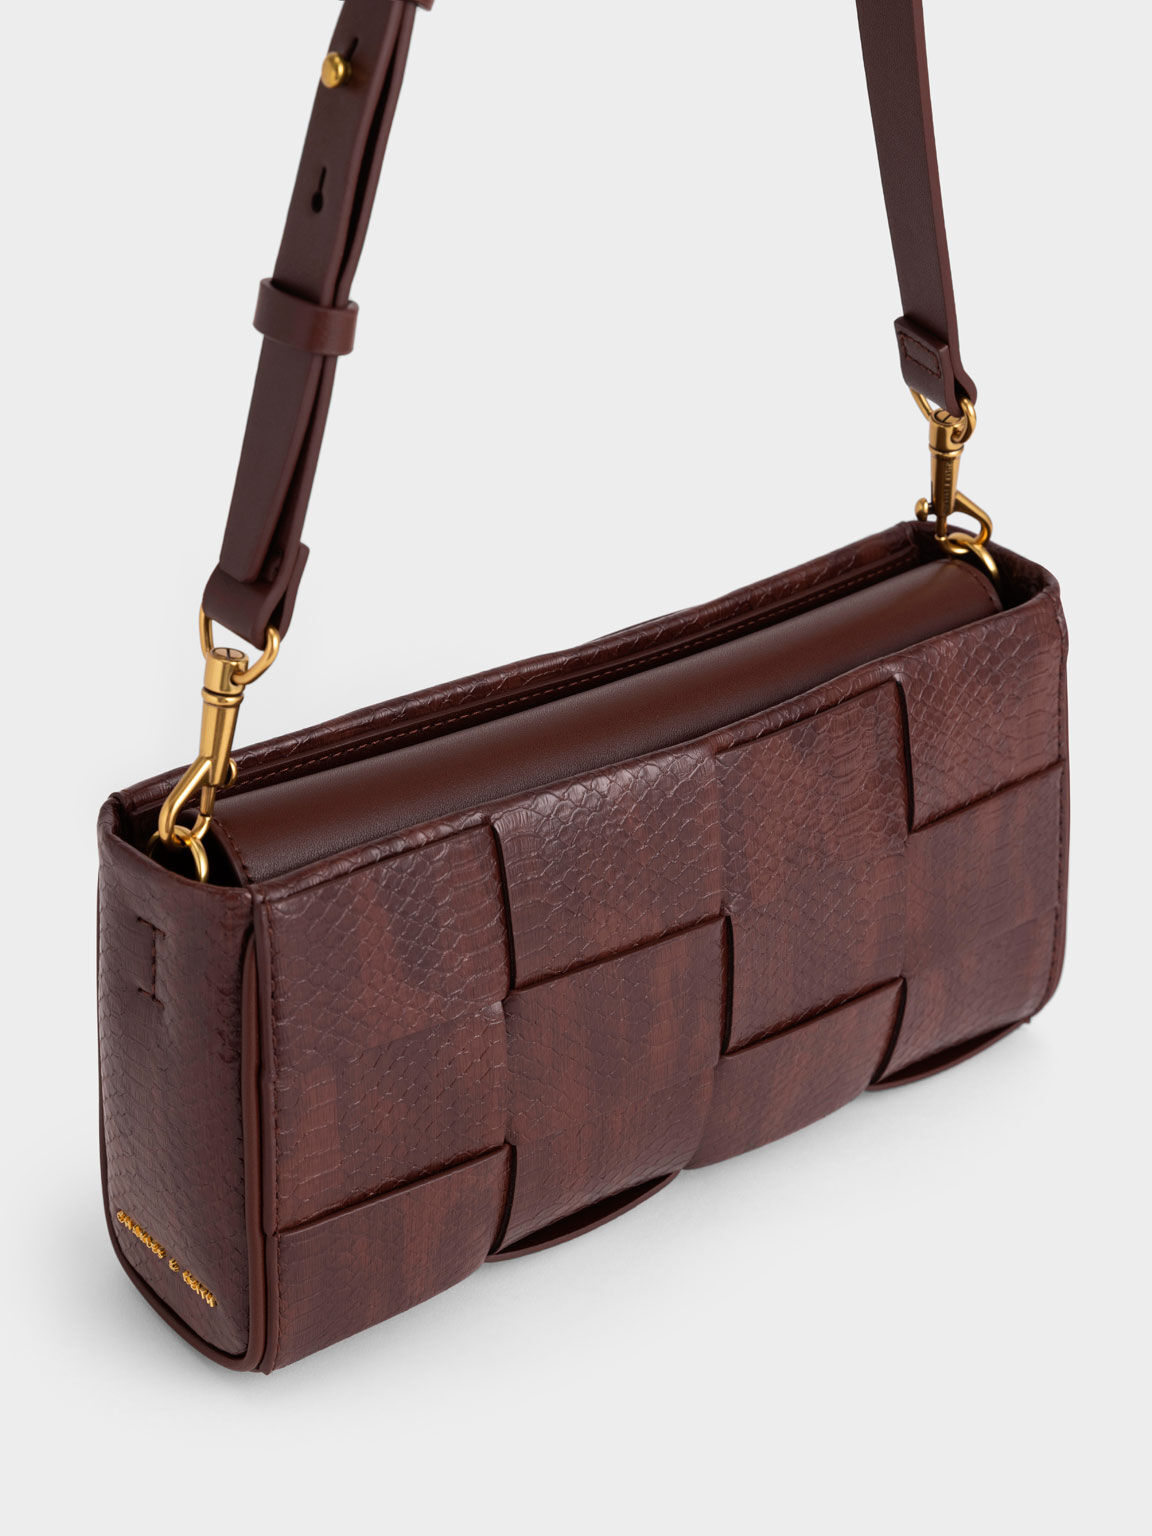 Woven Chain-Handle Bag, Brown, hi-res